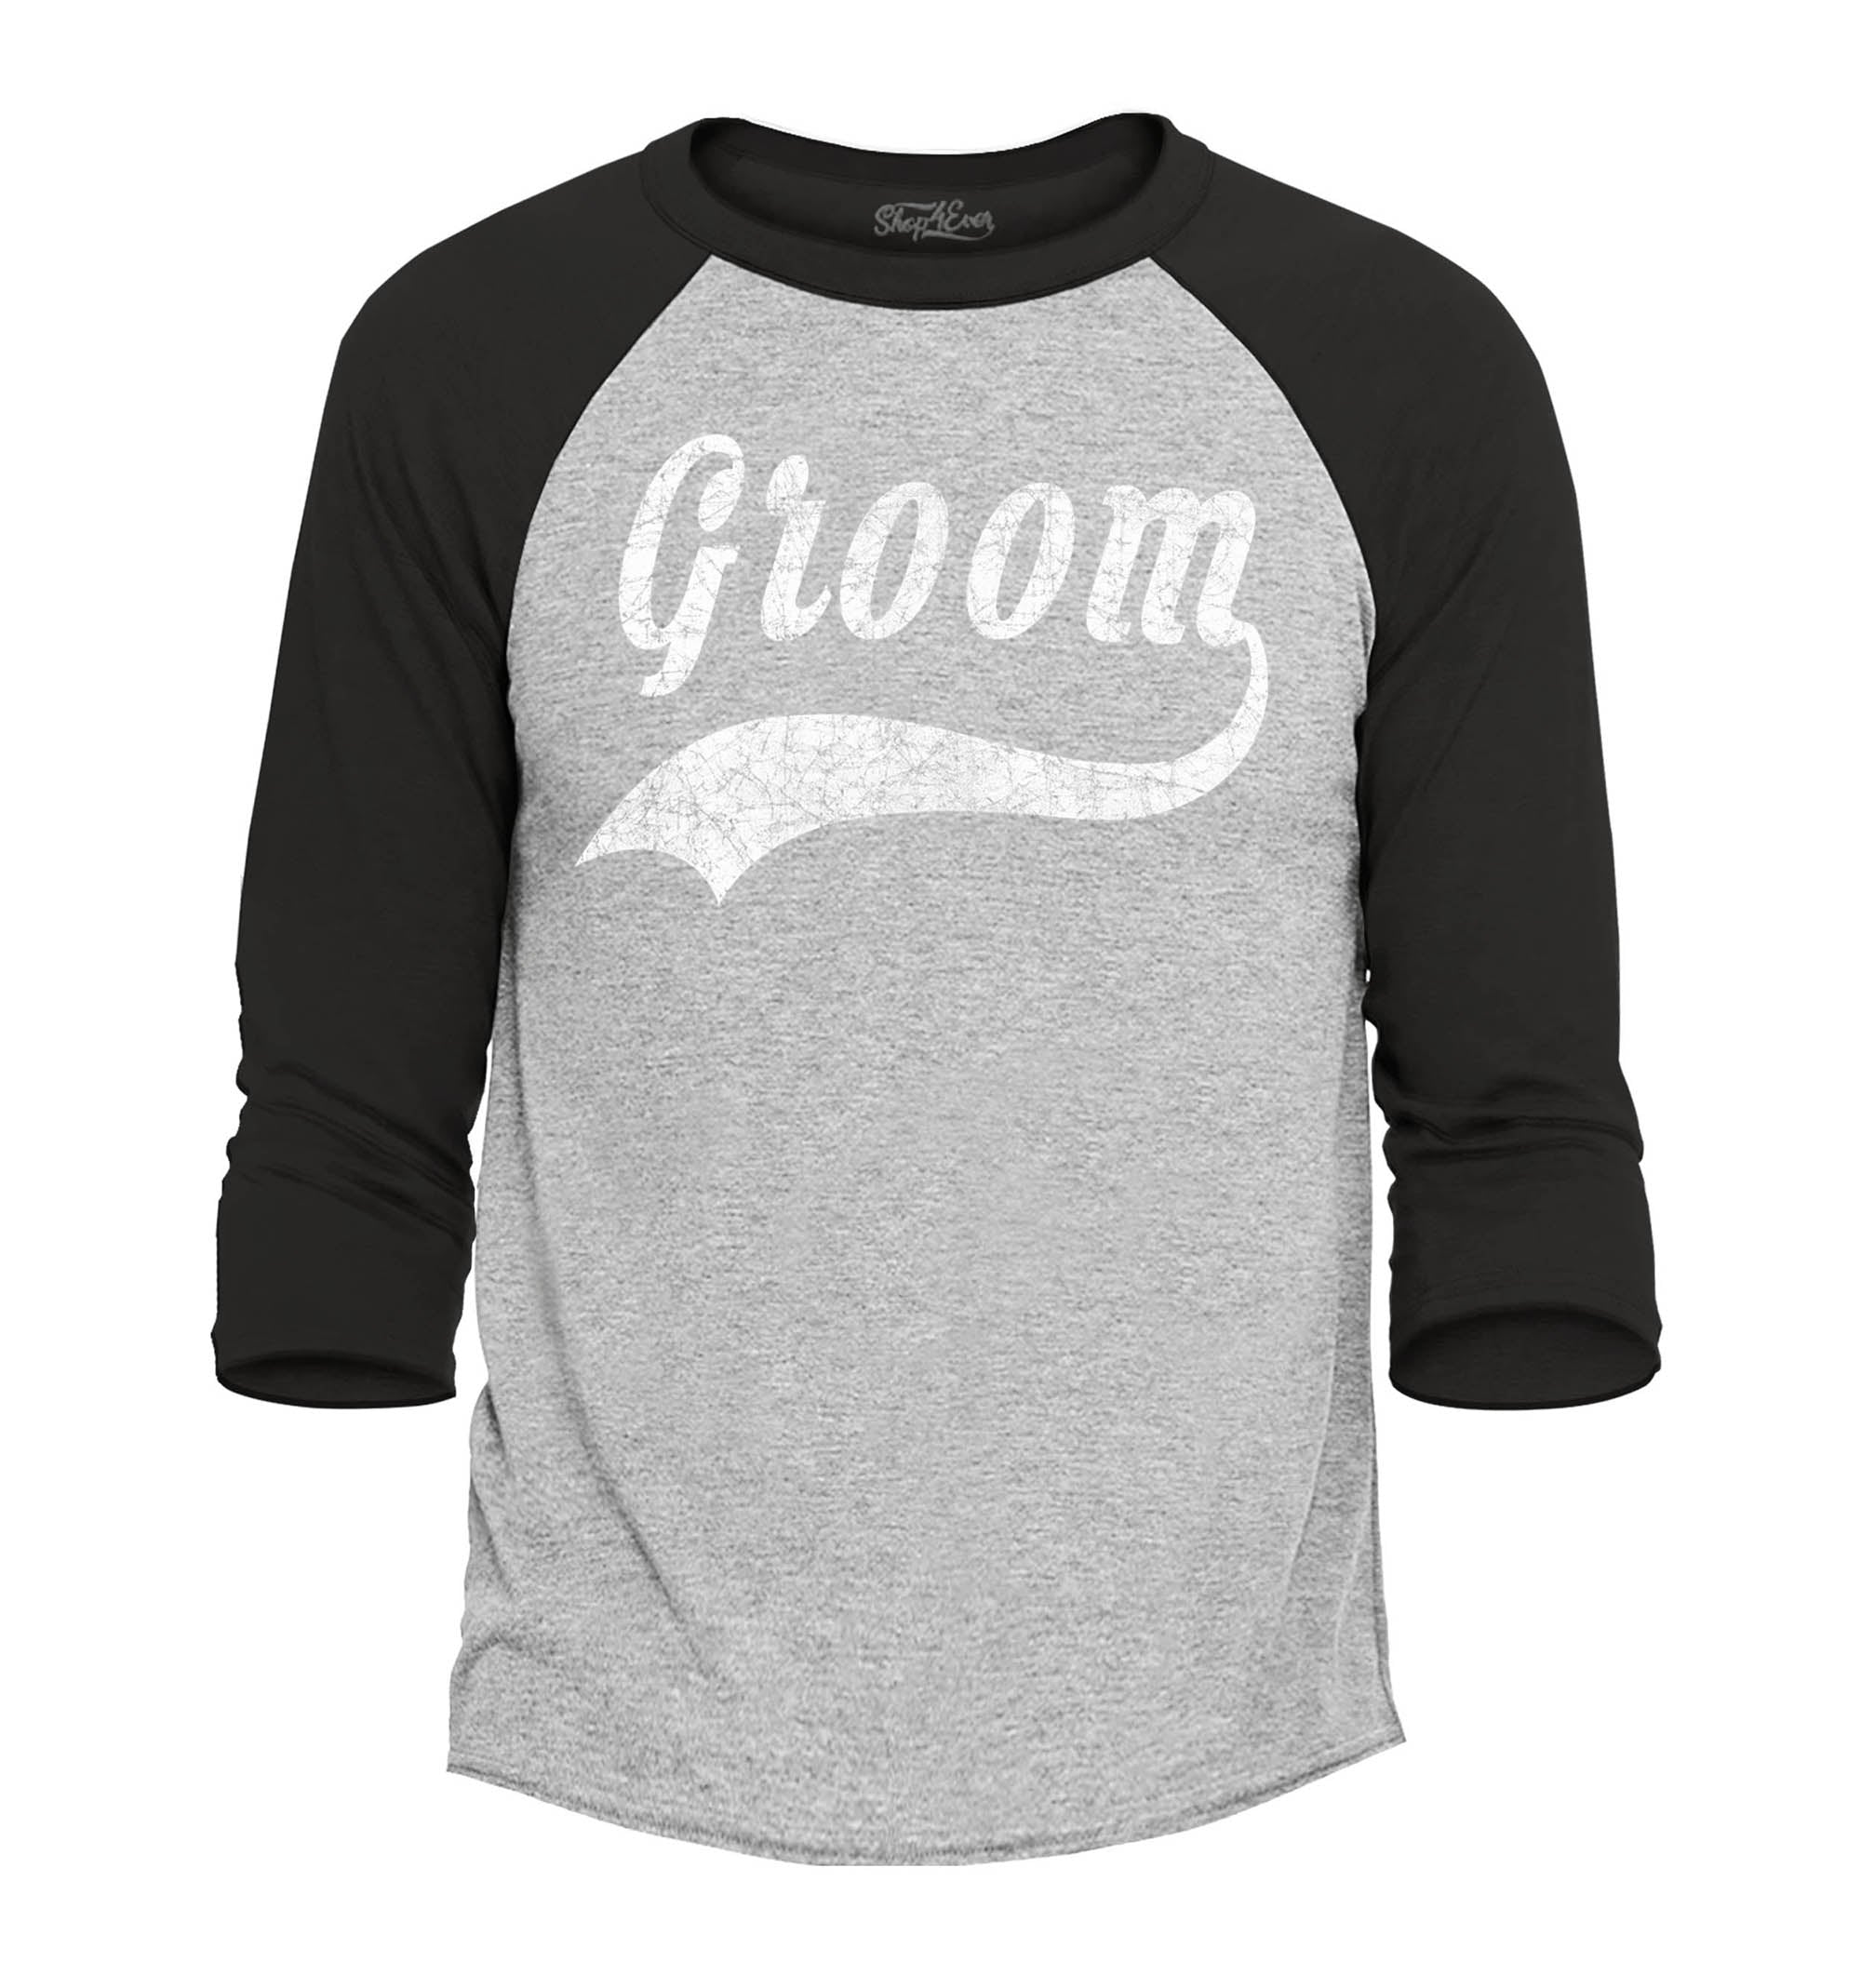 Groom Distressed Wedding Raglan Baseball Shirt